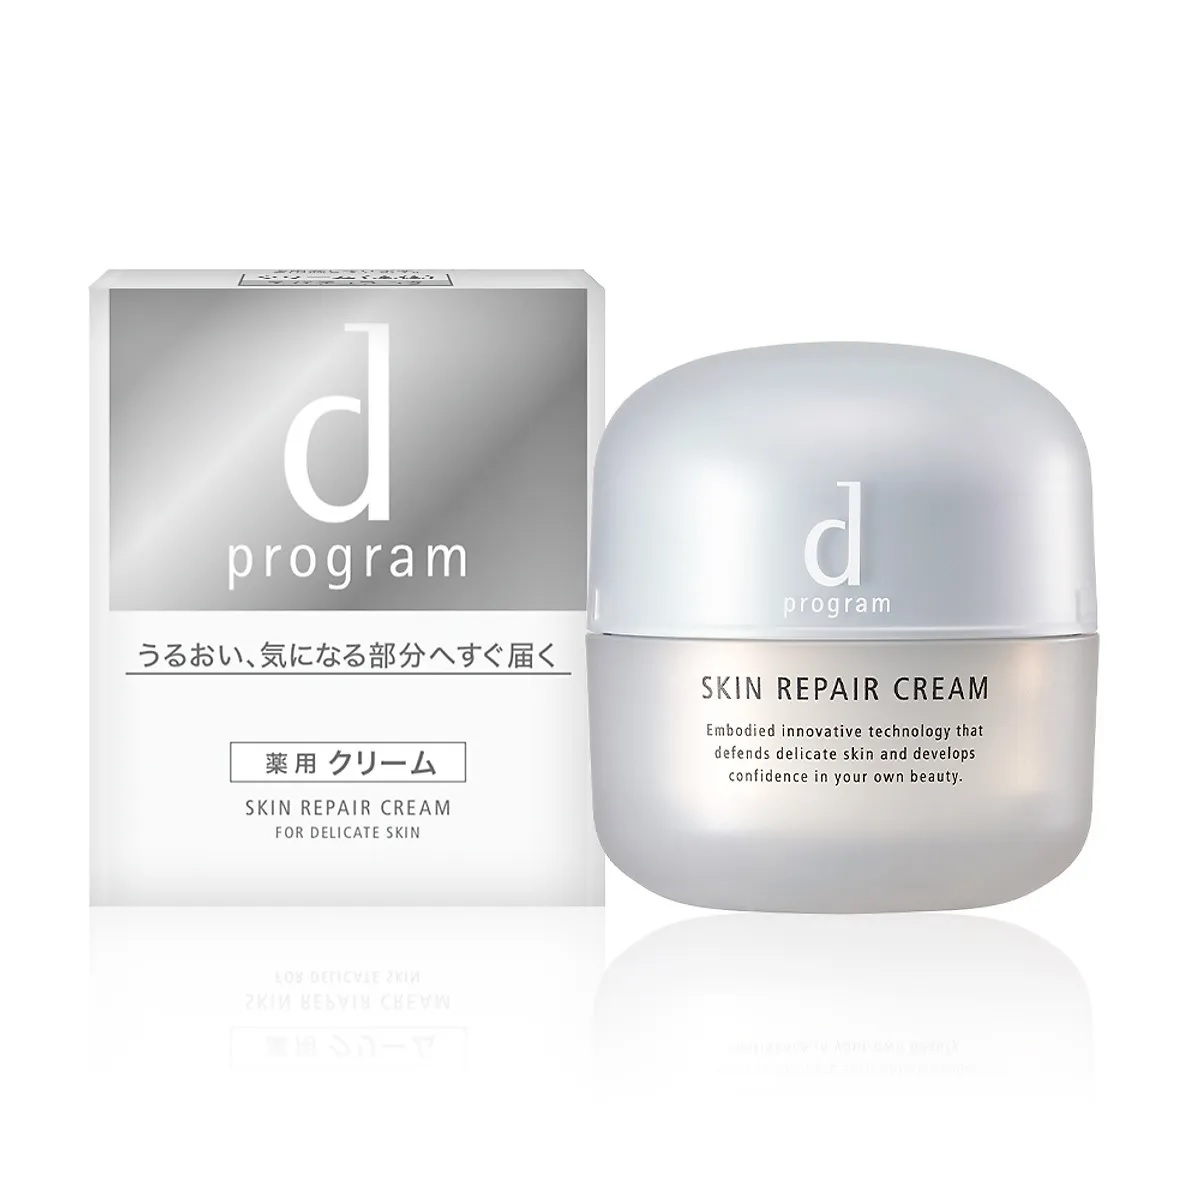 Thiết kế của Kem dưỡng D'Program Skin Repair Cream